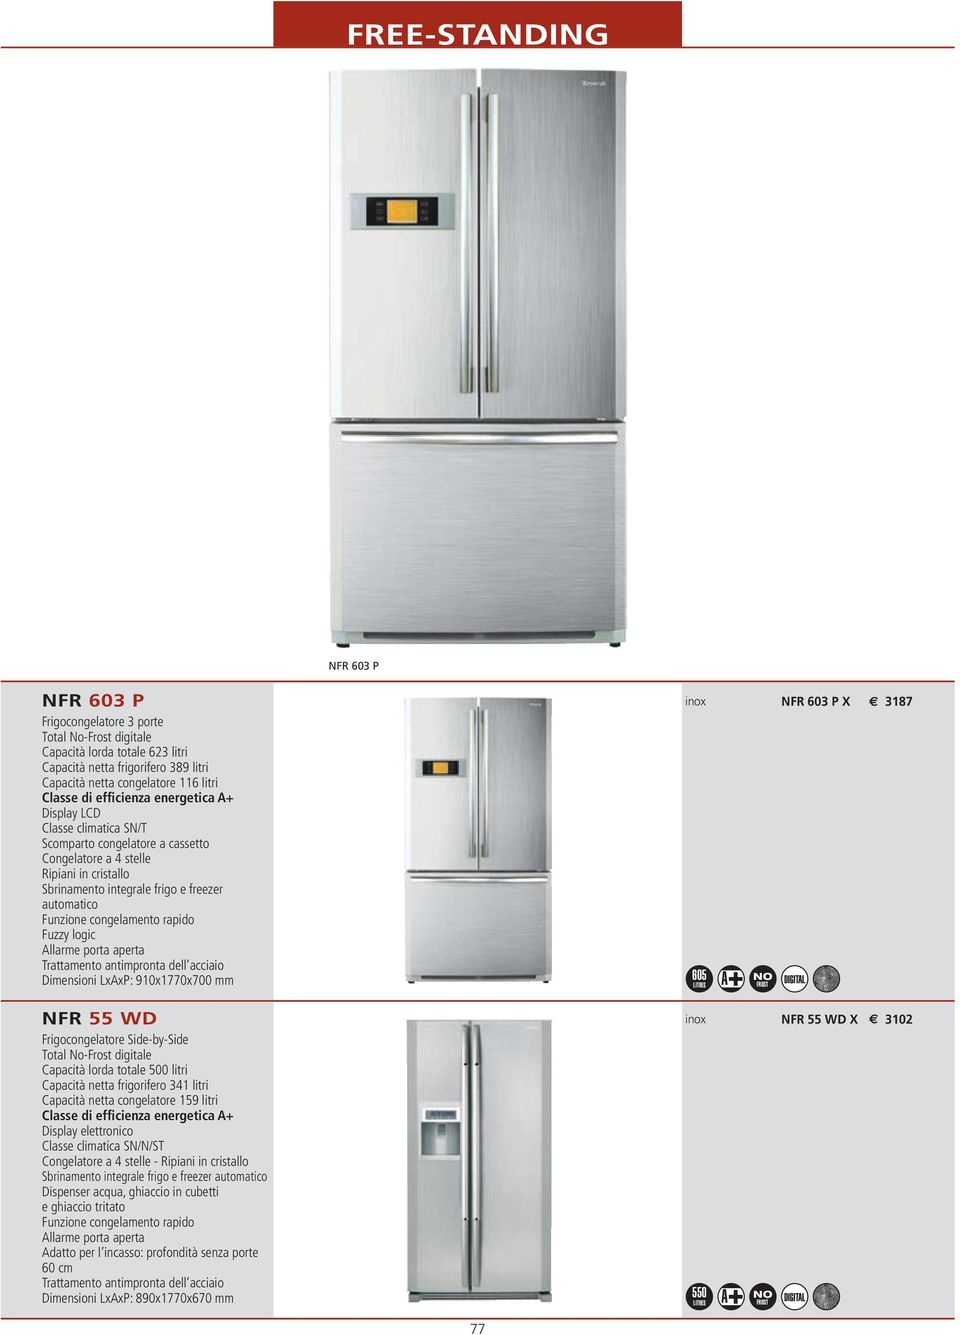 NFR 55 WD Frigocongelatore Side-by-Side Total No-Frost digitale Capacità lorda totale 500 litri Capacità netta frigorifero 341 litri Capacità netta congelatore 159 litri Classe di efficienza